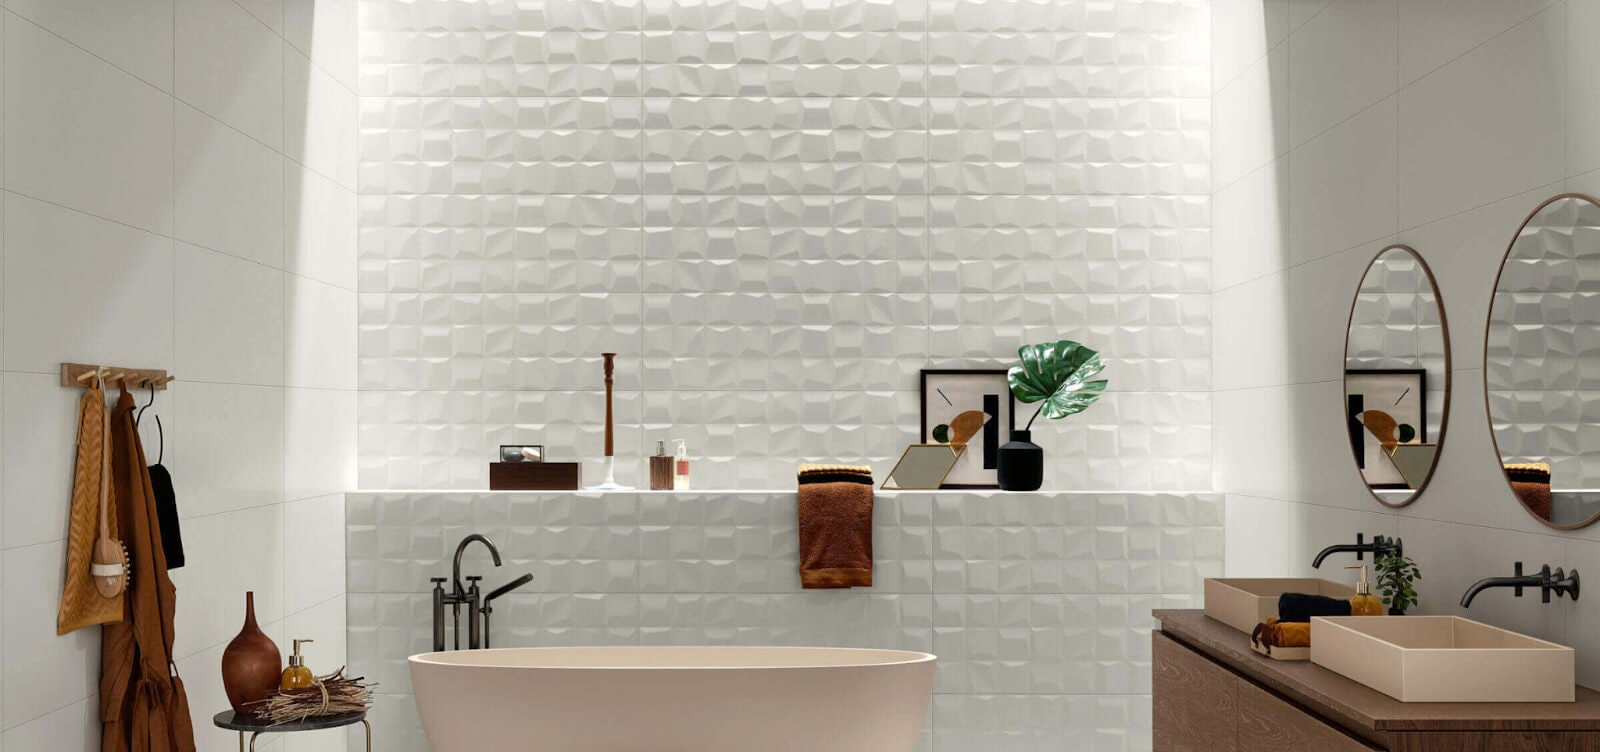 Bathroom wall with a three-dimensional white mosaic tile grid